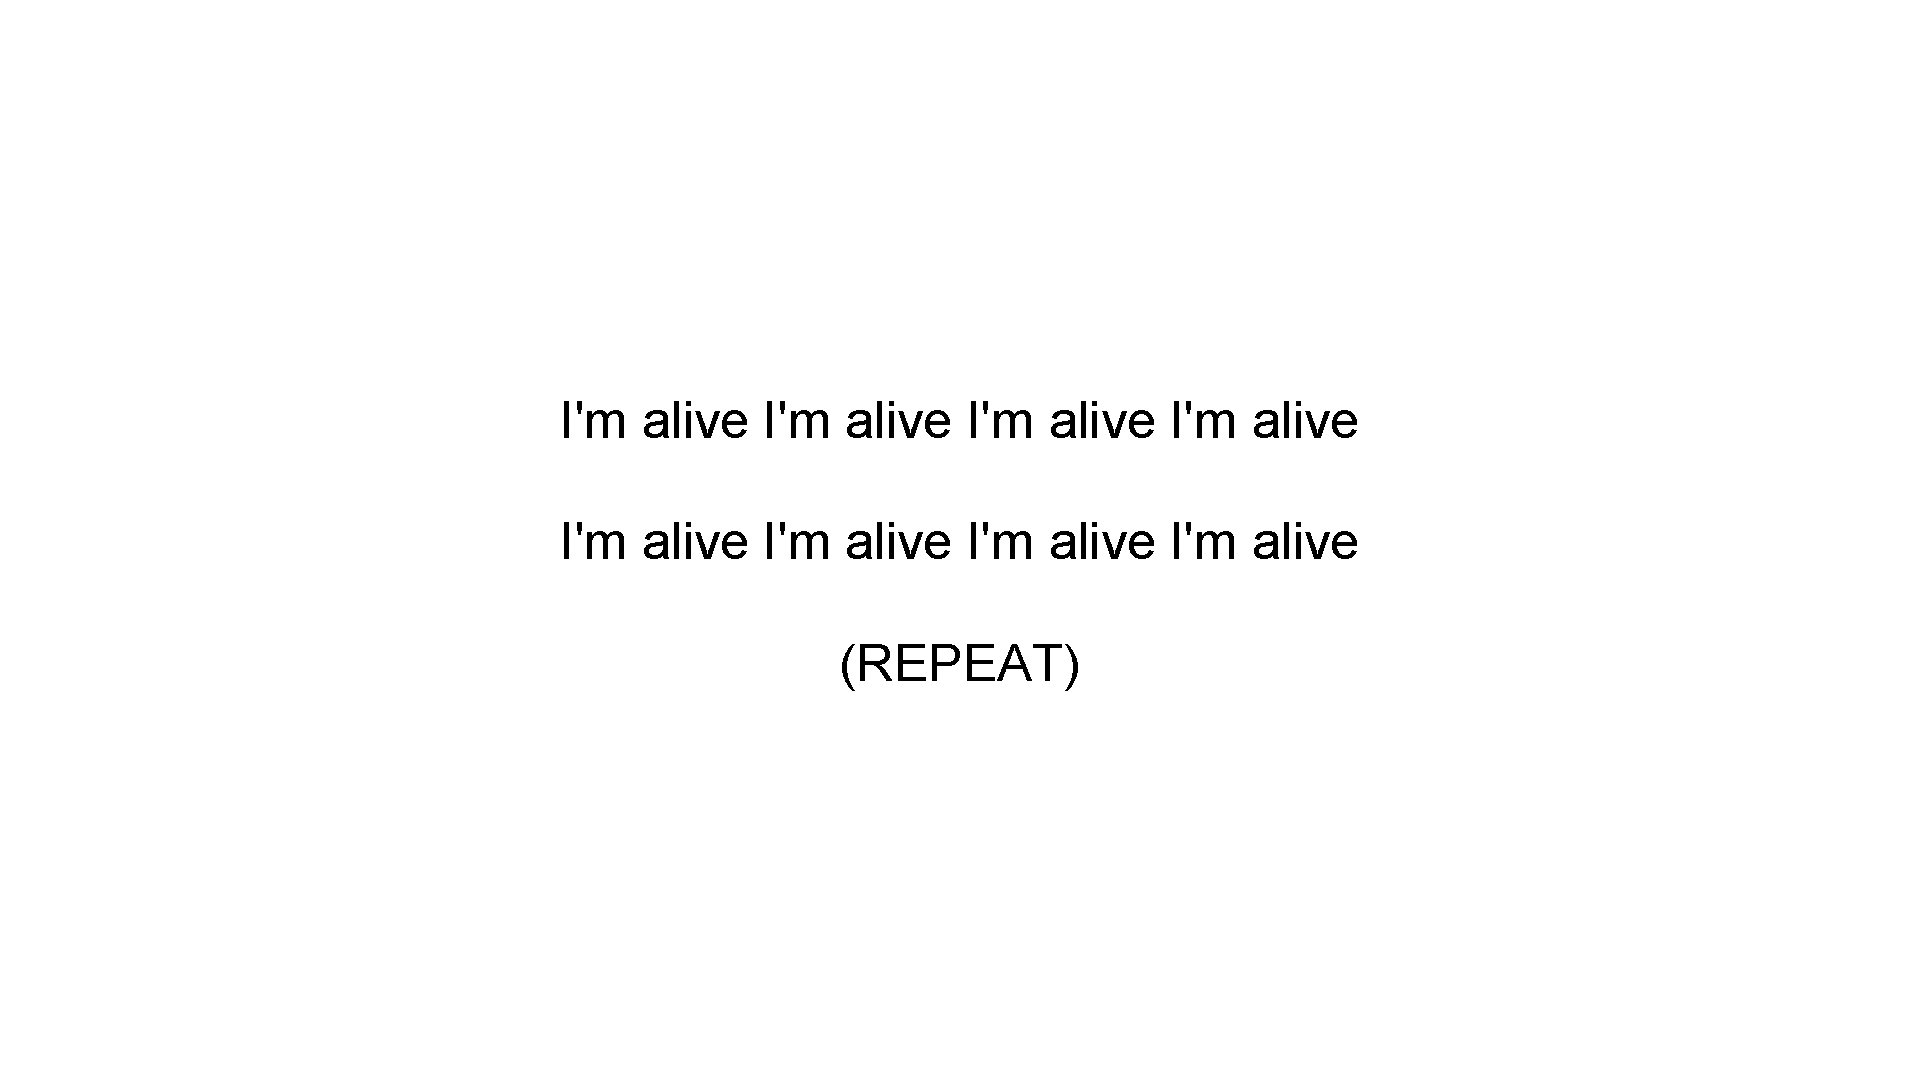 I'm alive I'm alive (REPEAT) 